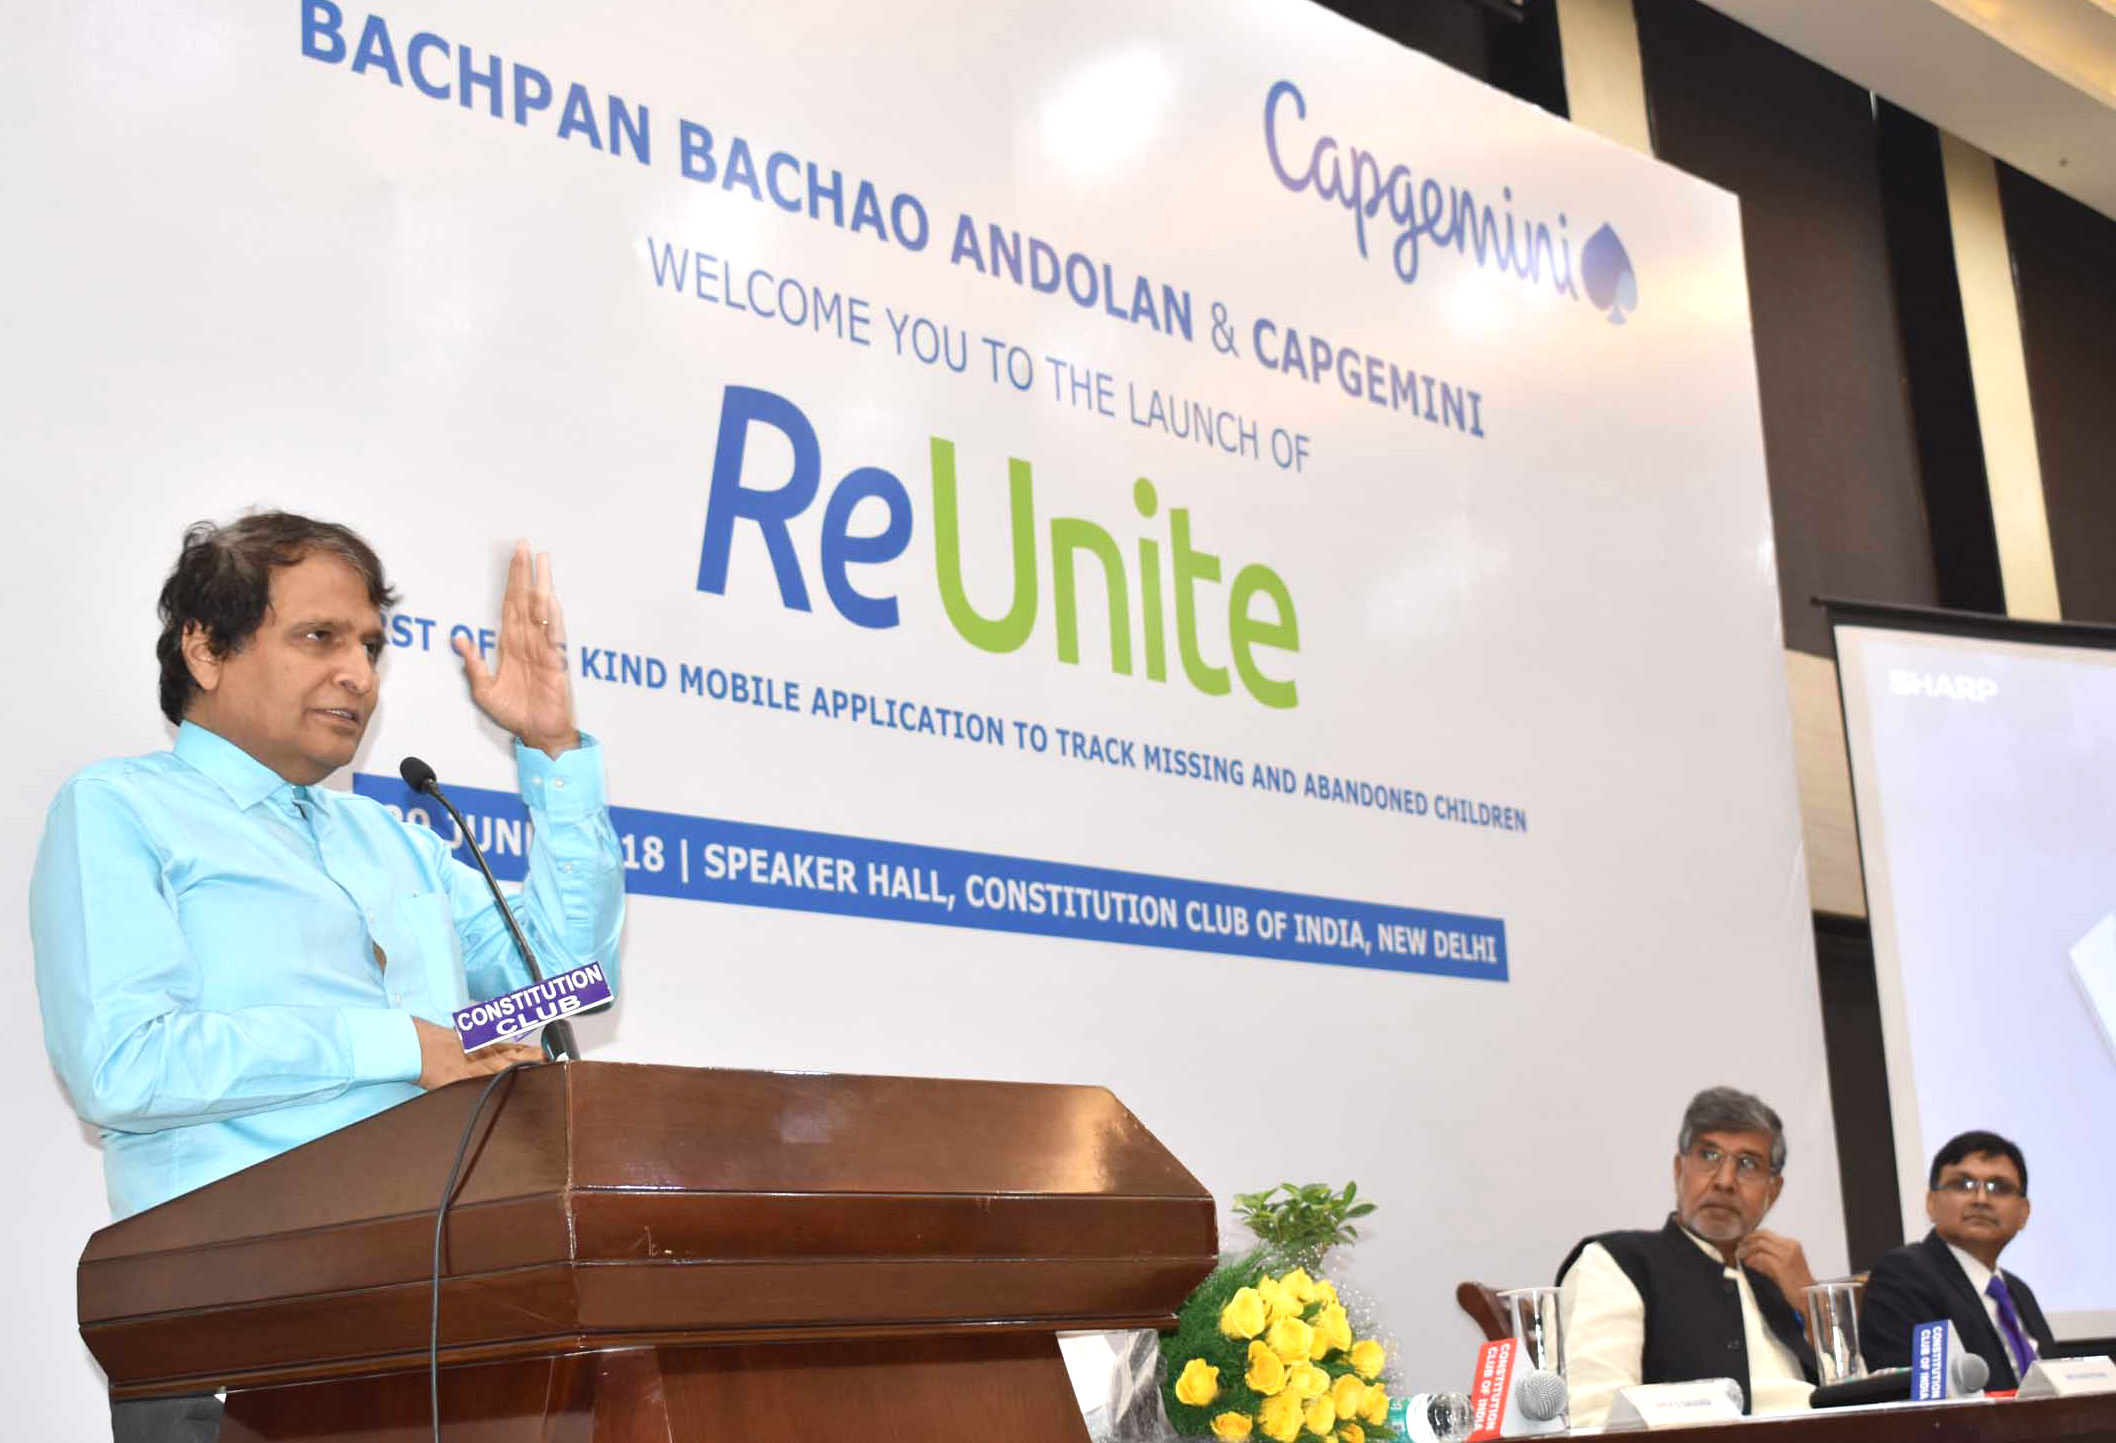 The Union Minister for Commerce & Industry and Civil Aviation, Shri Suresh Prabhakar Prabhu addressing at the launch of the Mobile Application ReUnite by Bachpan Bachao Andolan, in New Delhi on June 29, 2018.